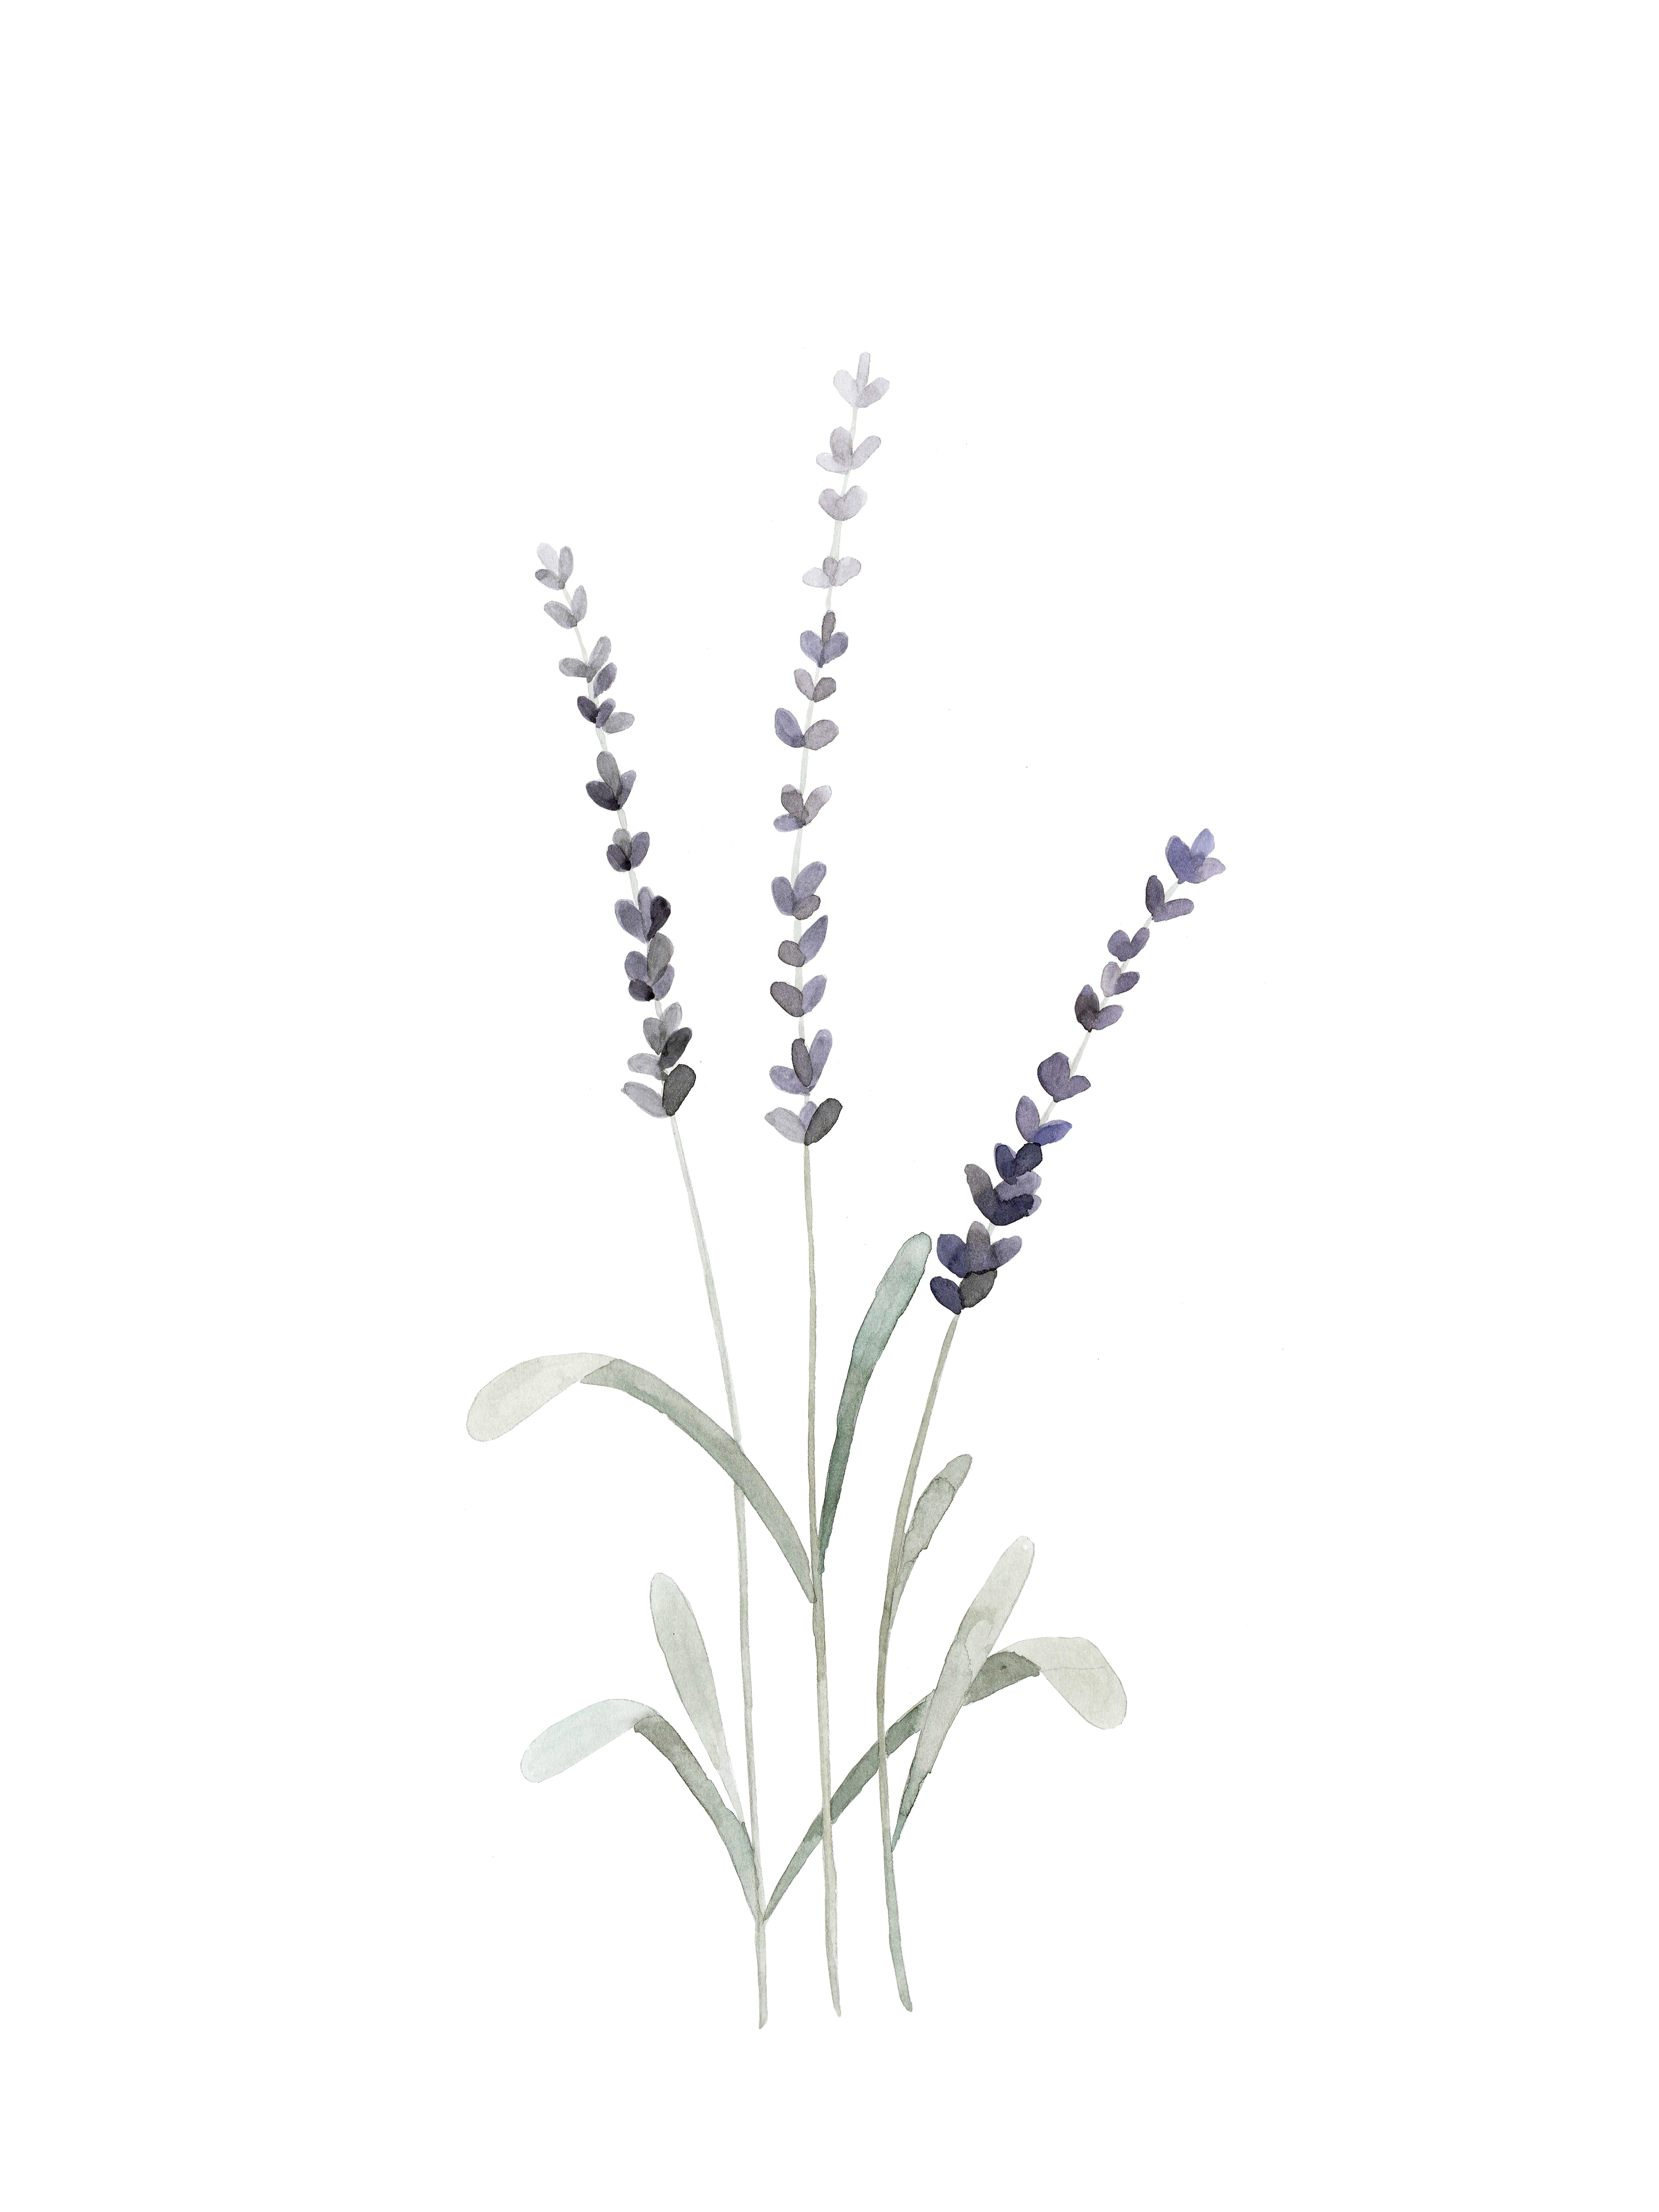 764-botanical-illustration---lavender2.jpg